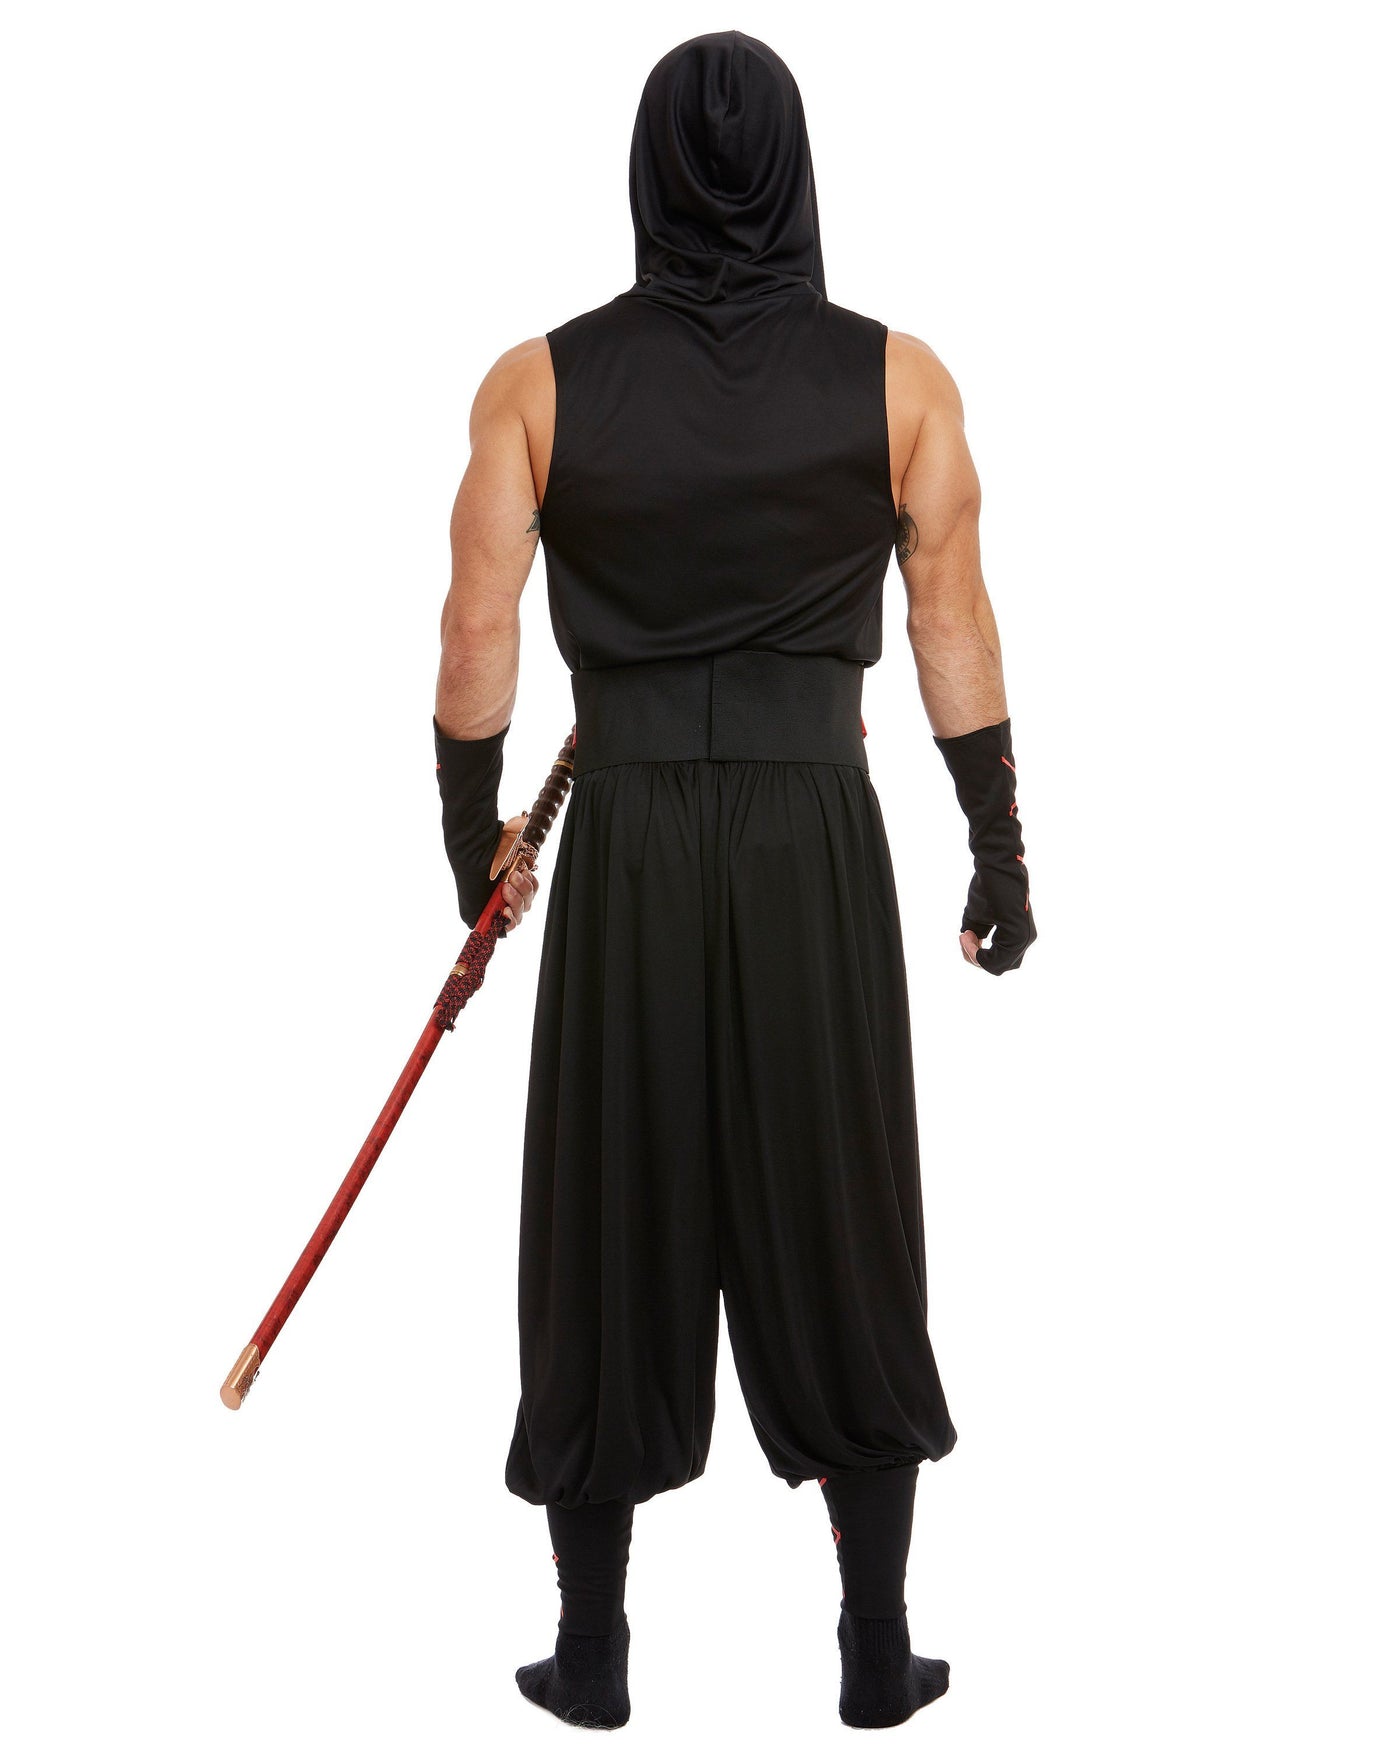 Men's Stealth Ninja Costume